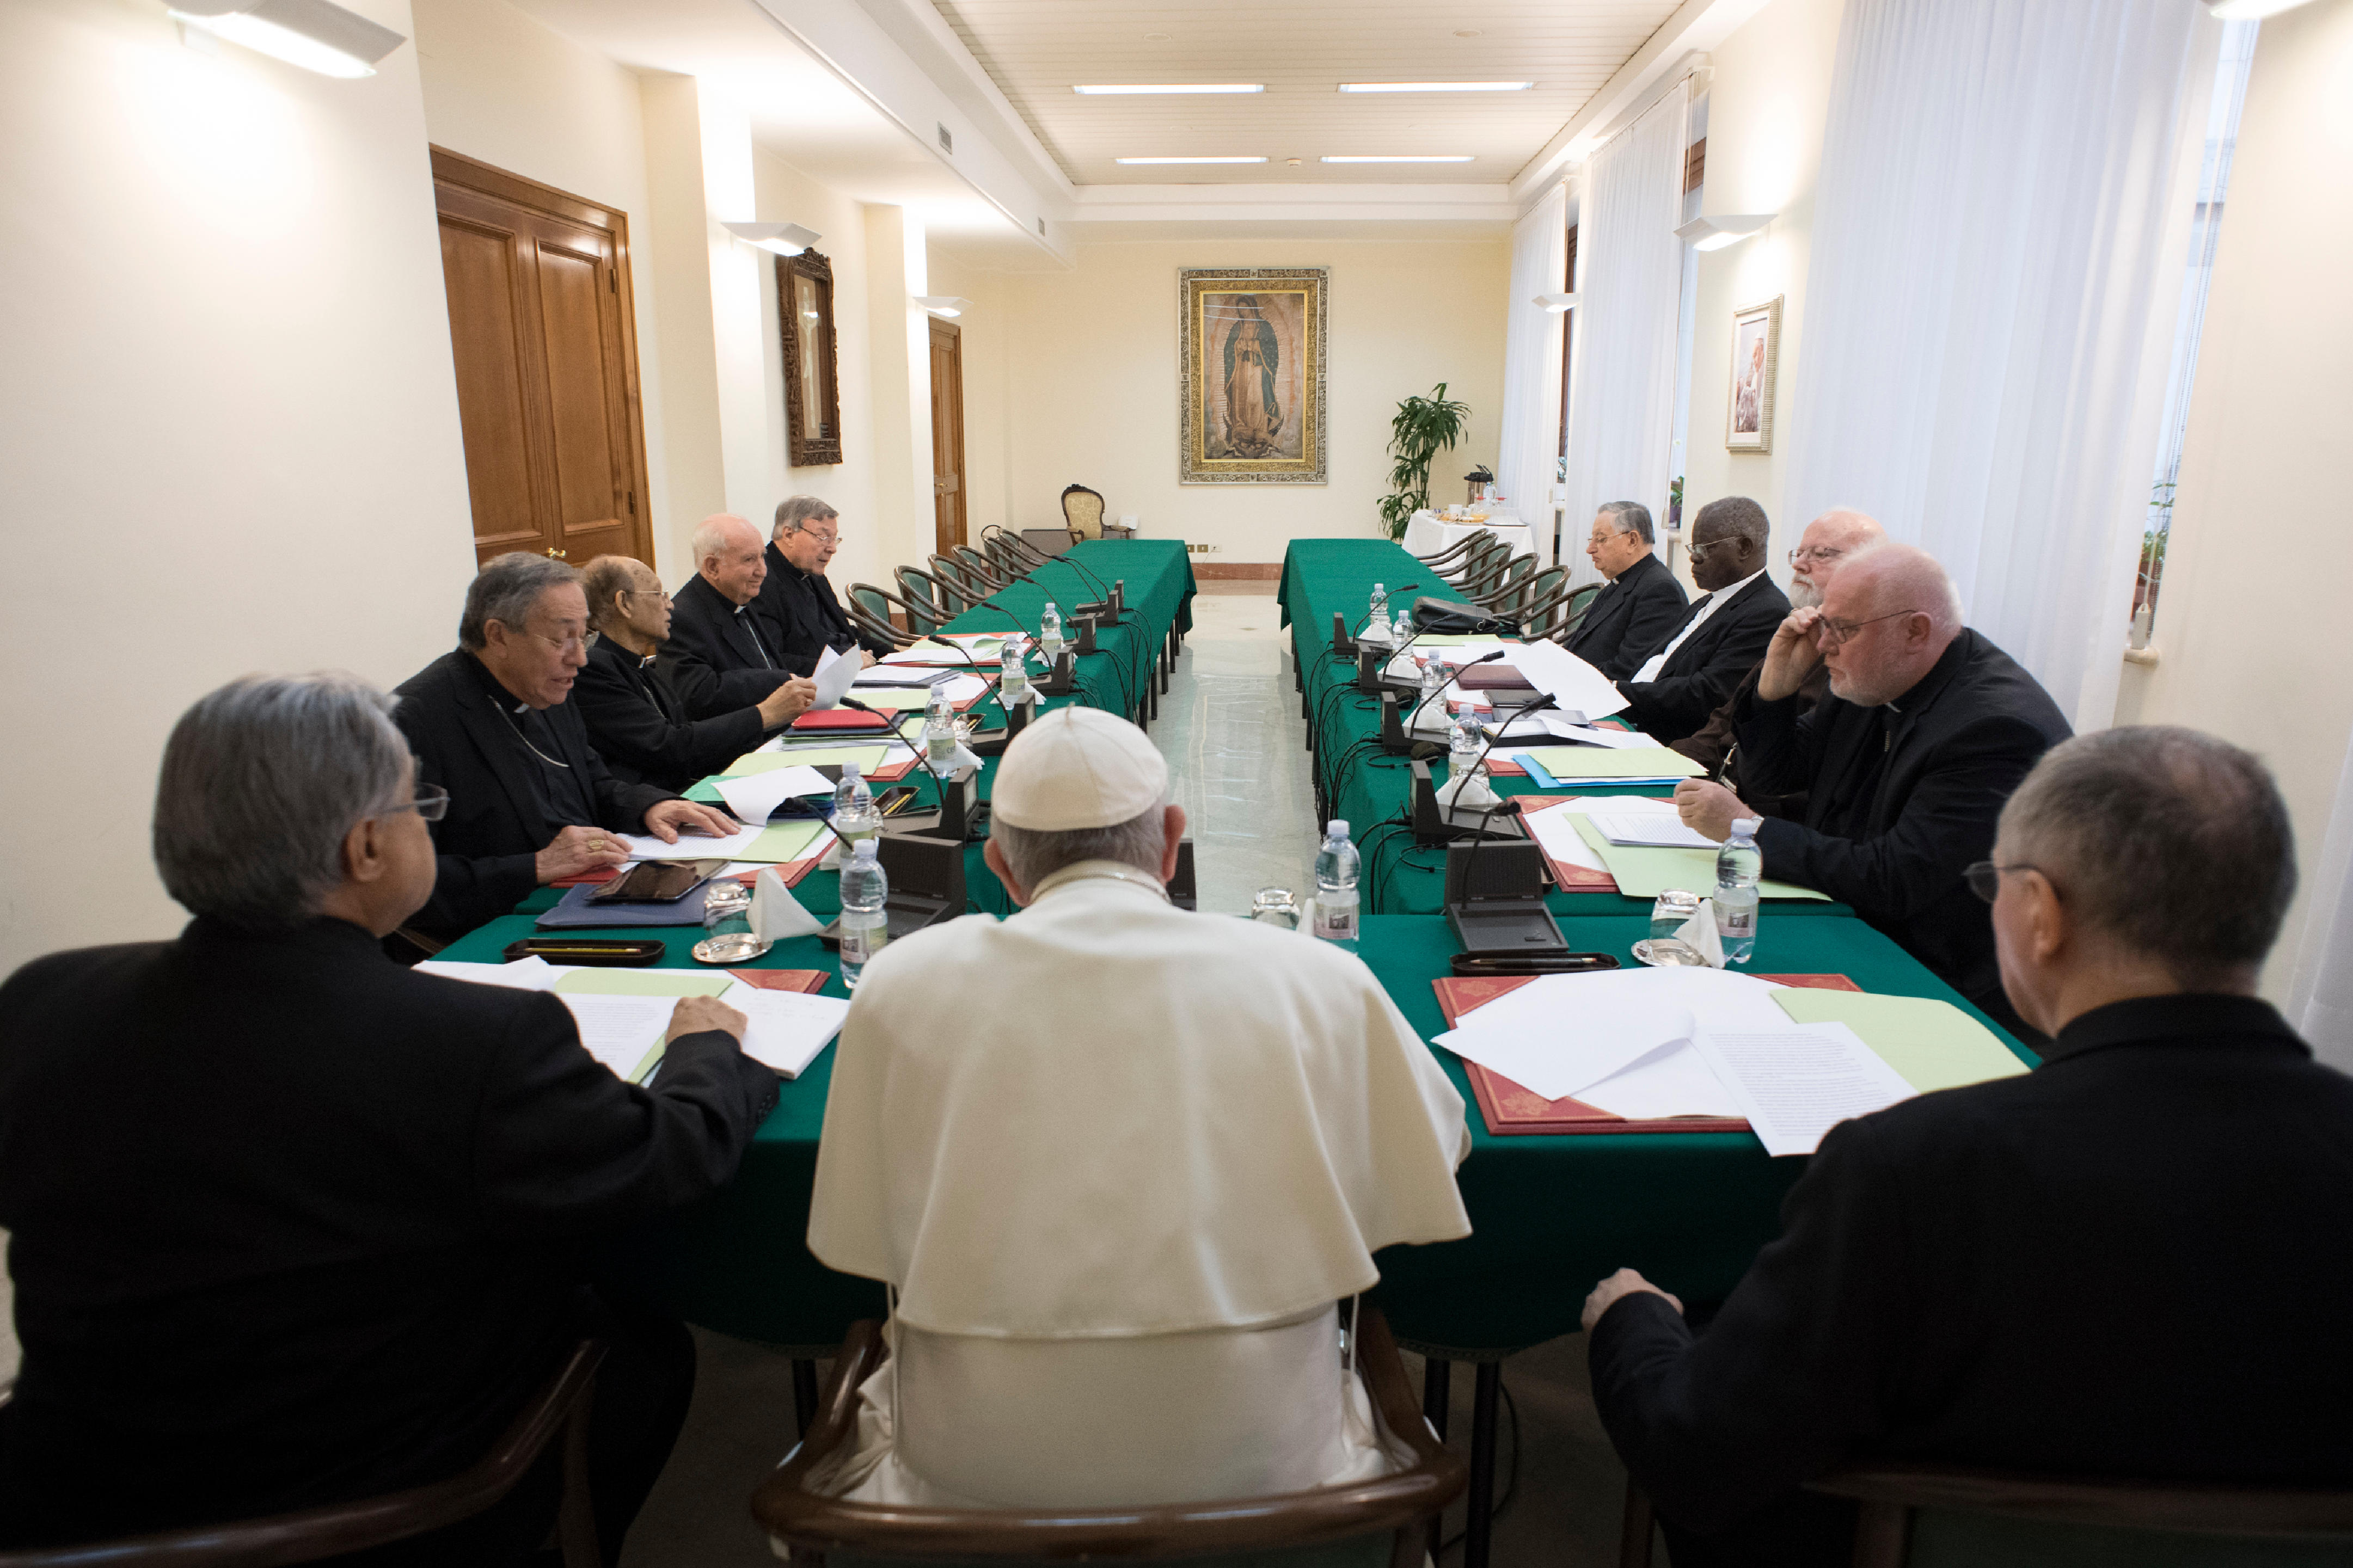 Vatican prepares to respond to Viganò 